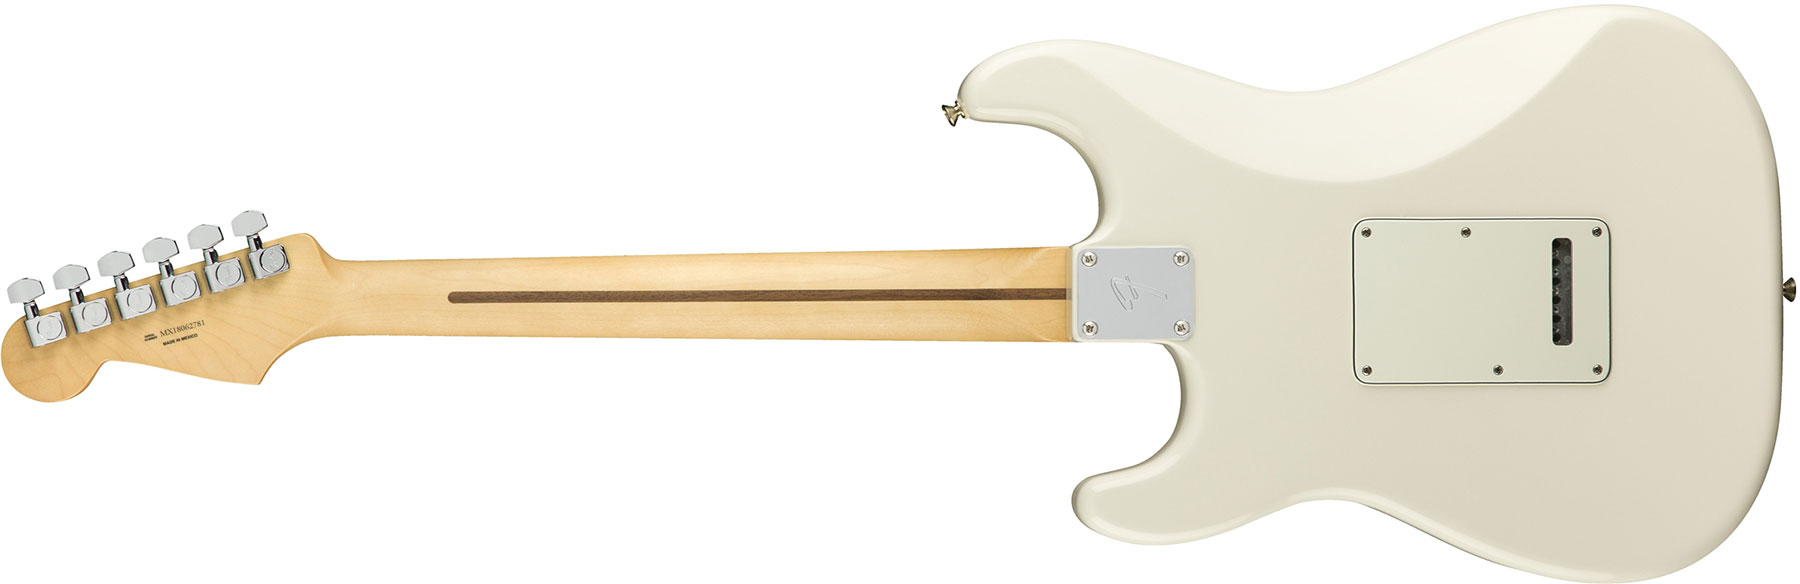 Fender Strat Player Mex Sss Mn - Polar White - Str shape electric guitar - Variation 1